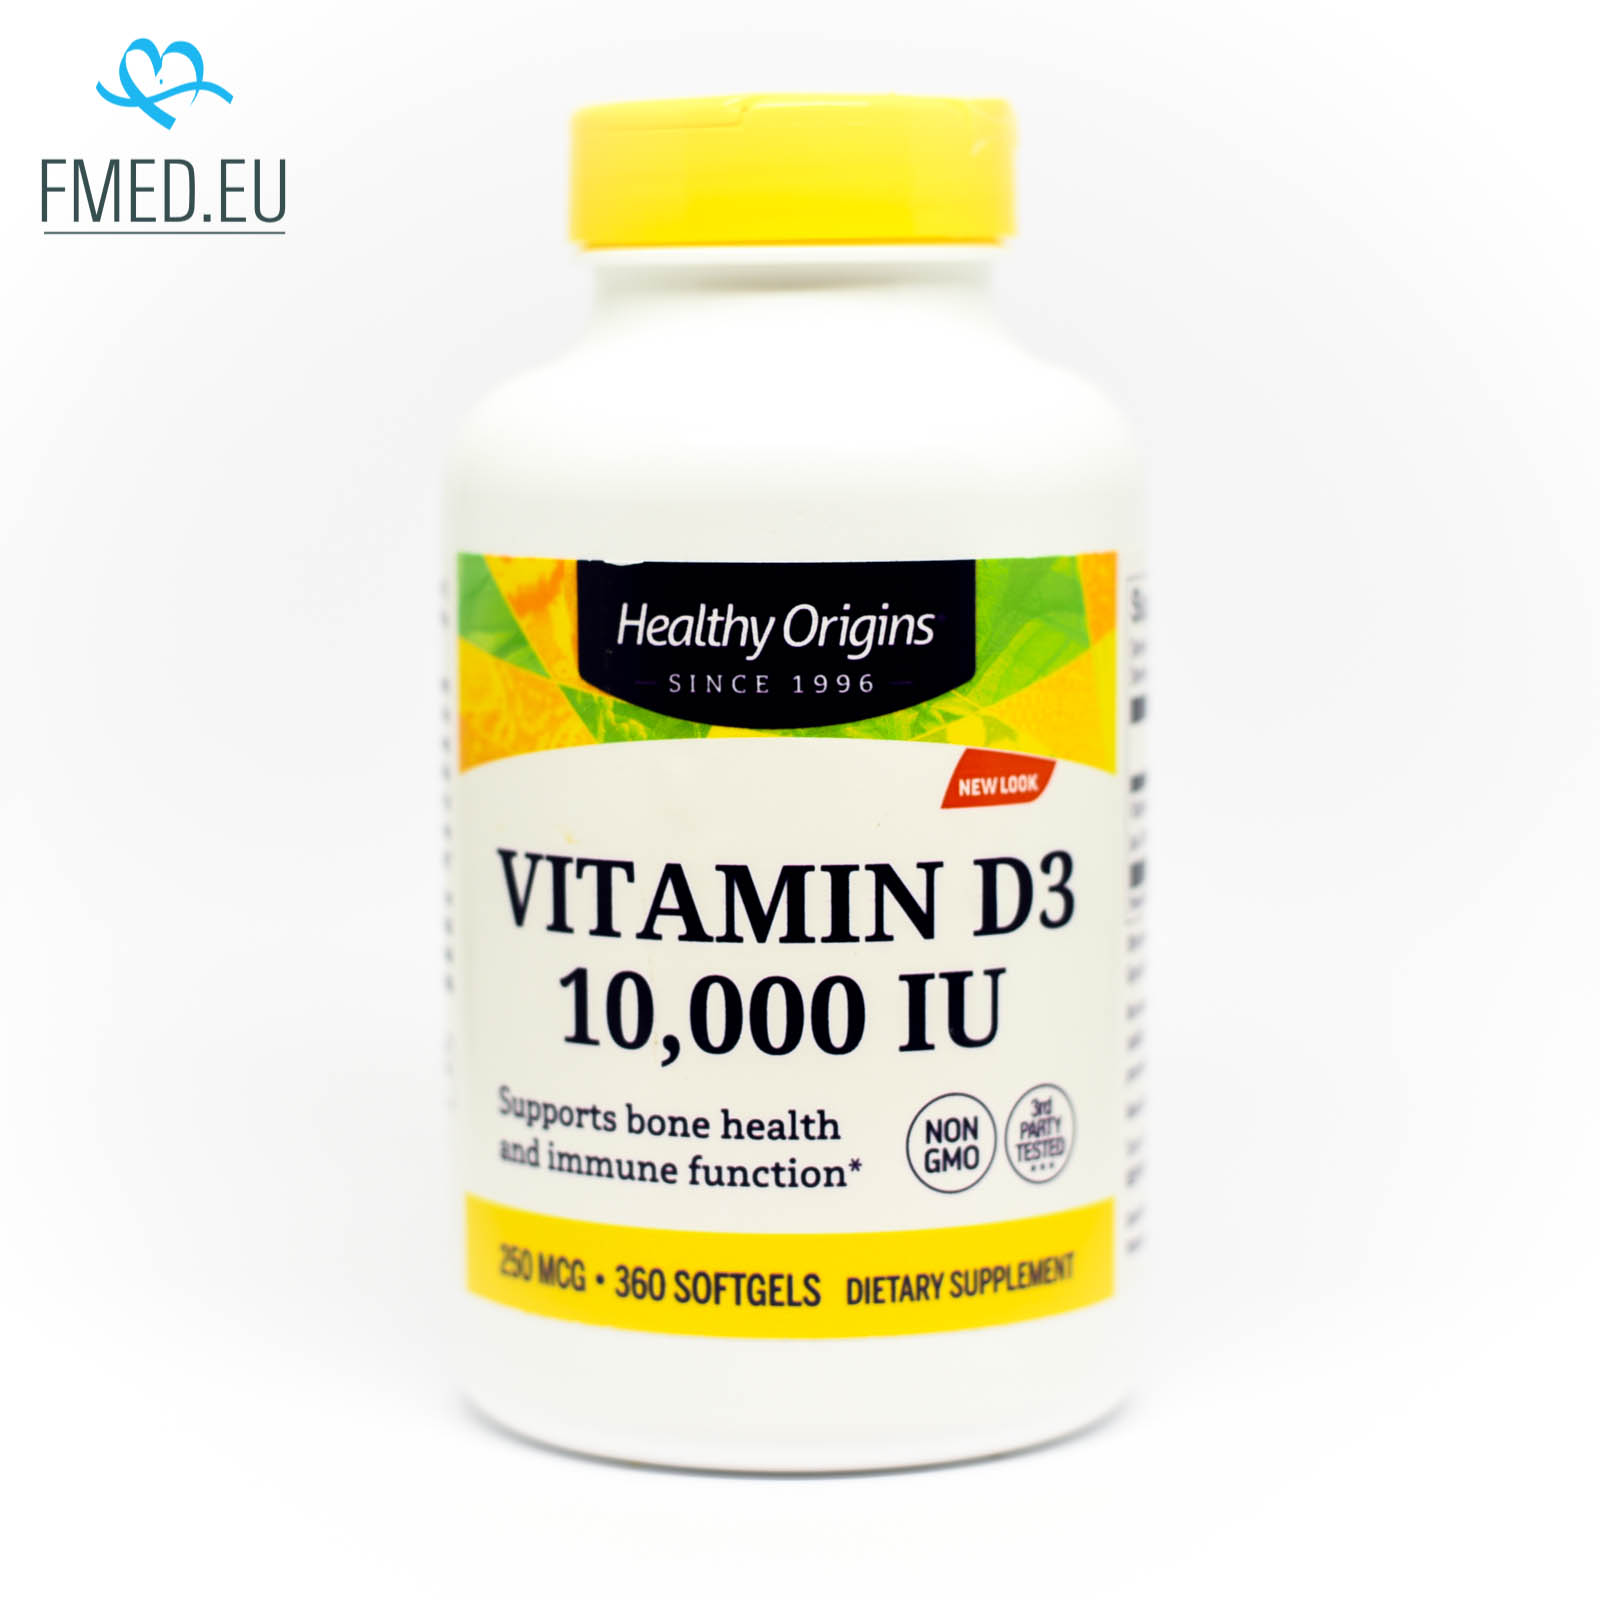 vitamin D covid korona imunološki sustav kosti mišići sunce